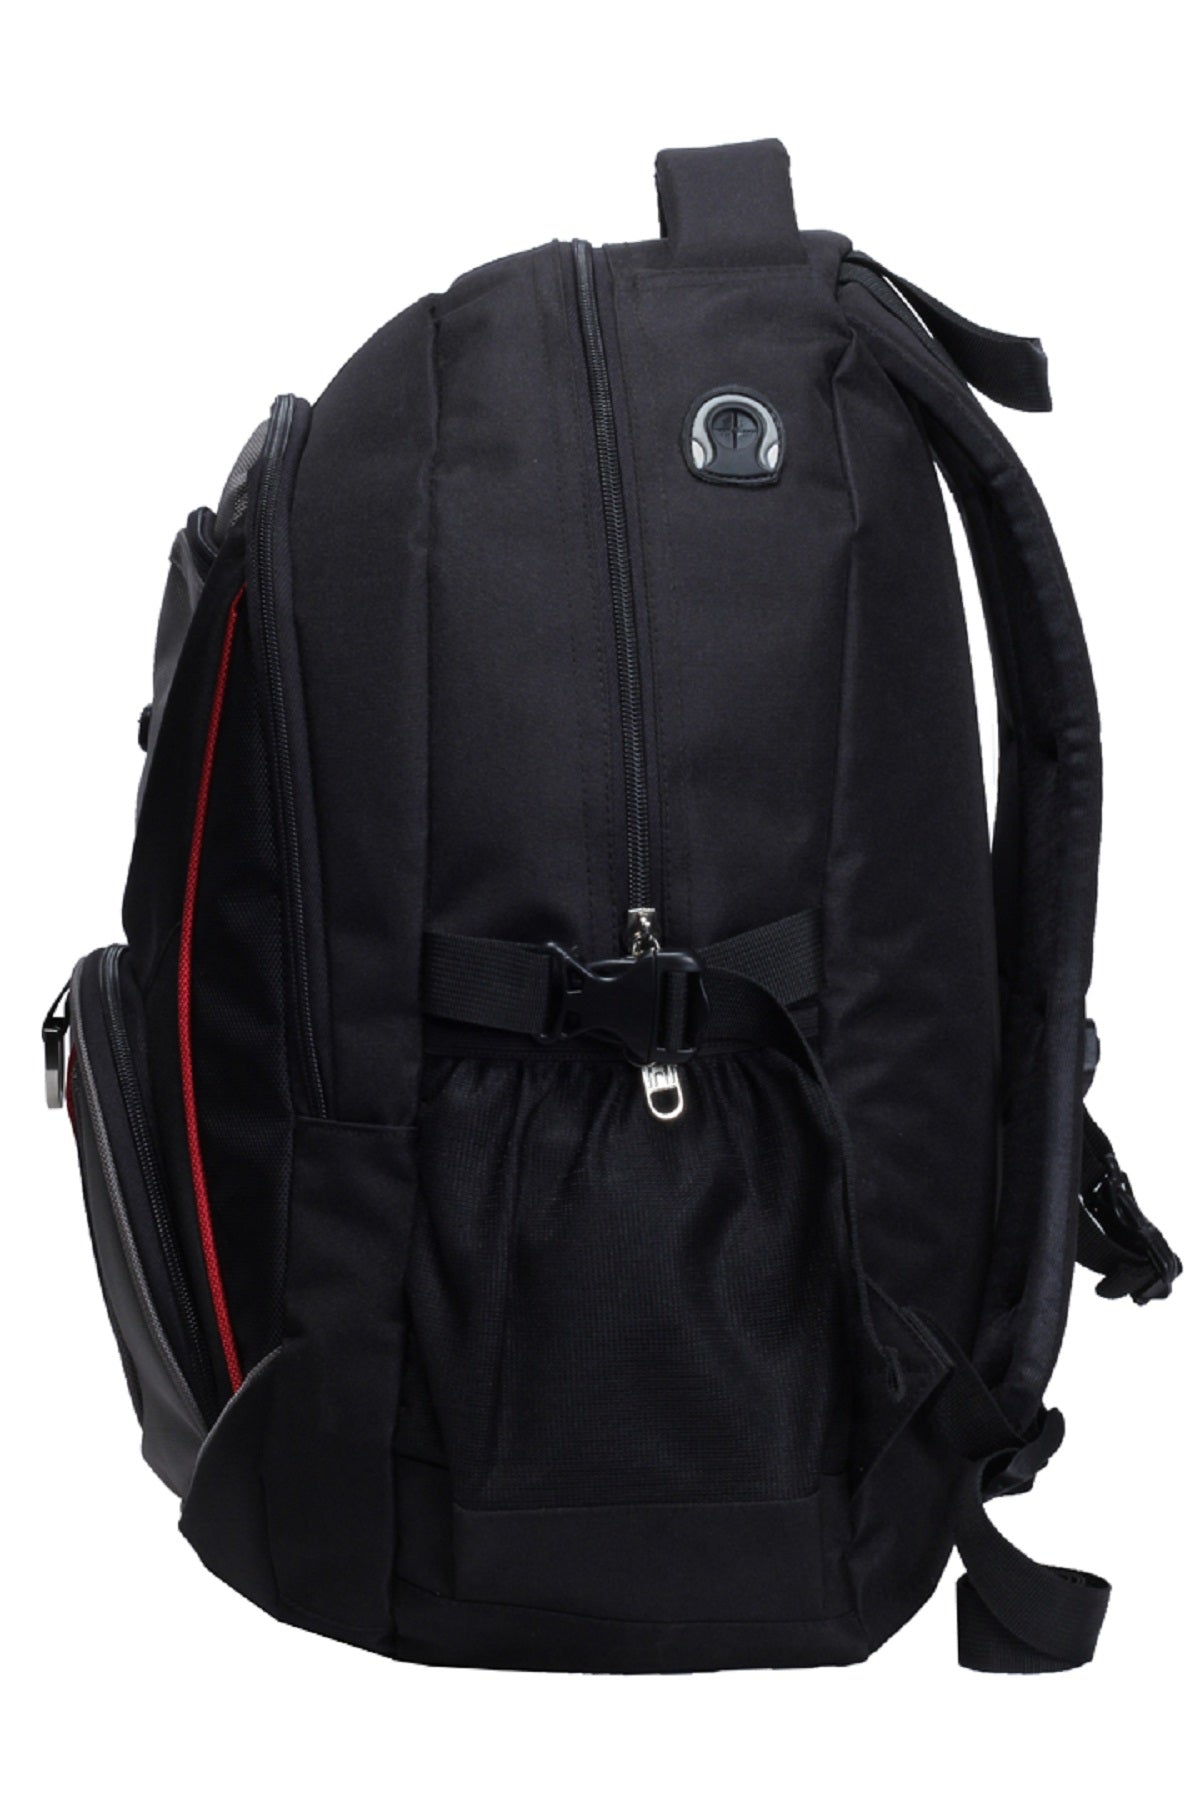 Axe 27L Black Grey Backpack